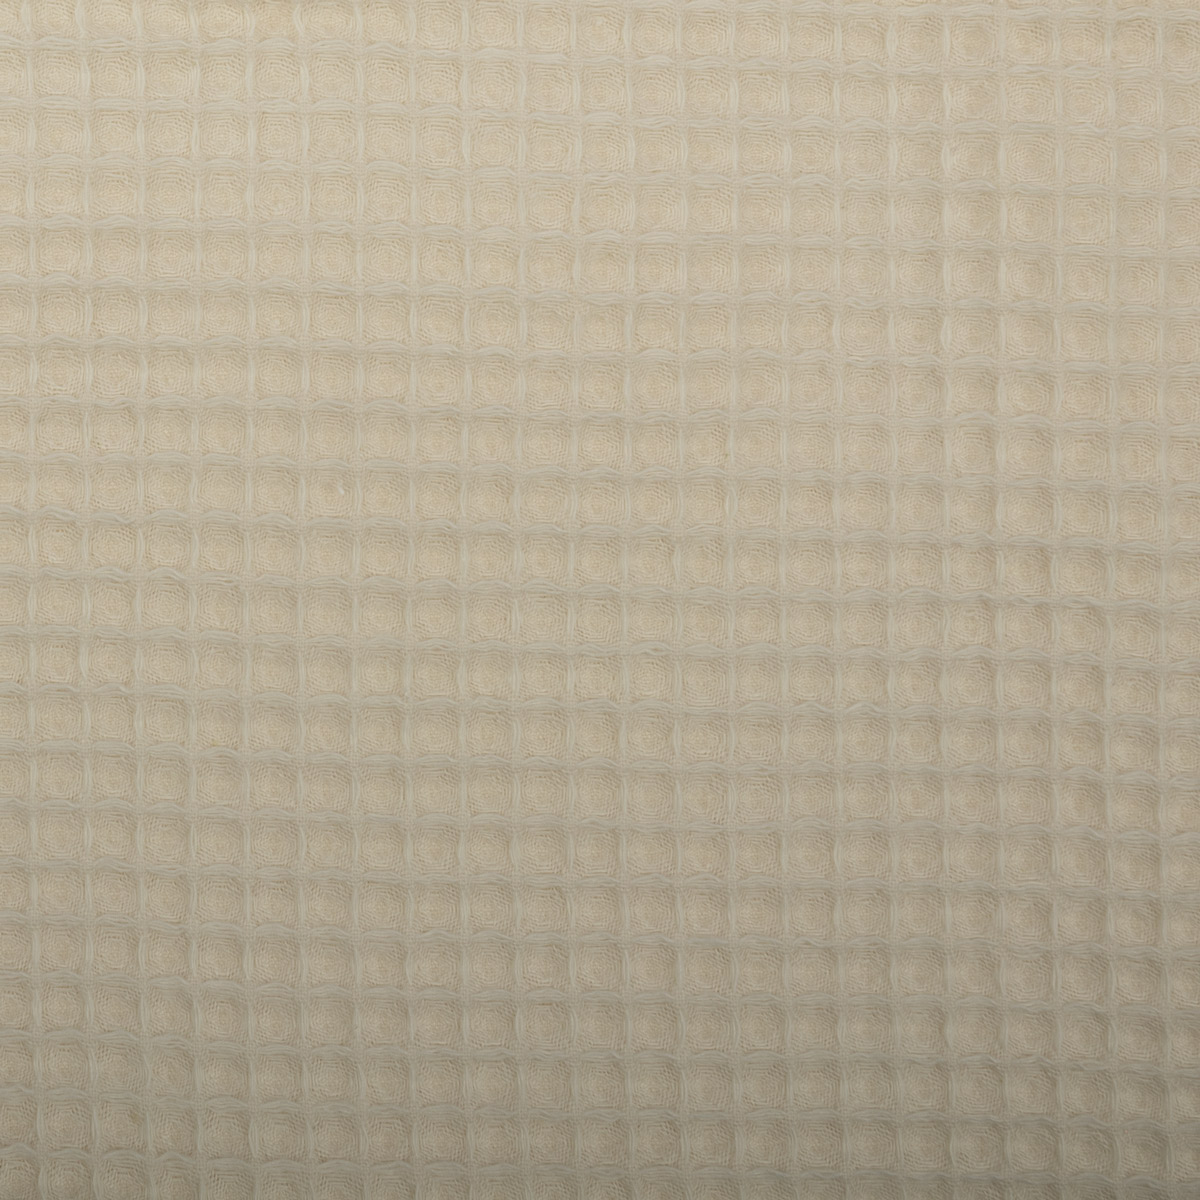 Ткань для пэчворка PEPPY TERRY WAFFLE 100 x 150 см 220 г/кв.м 100% хлопок 10 waffle ivory Фото 1.